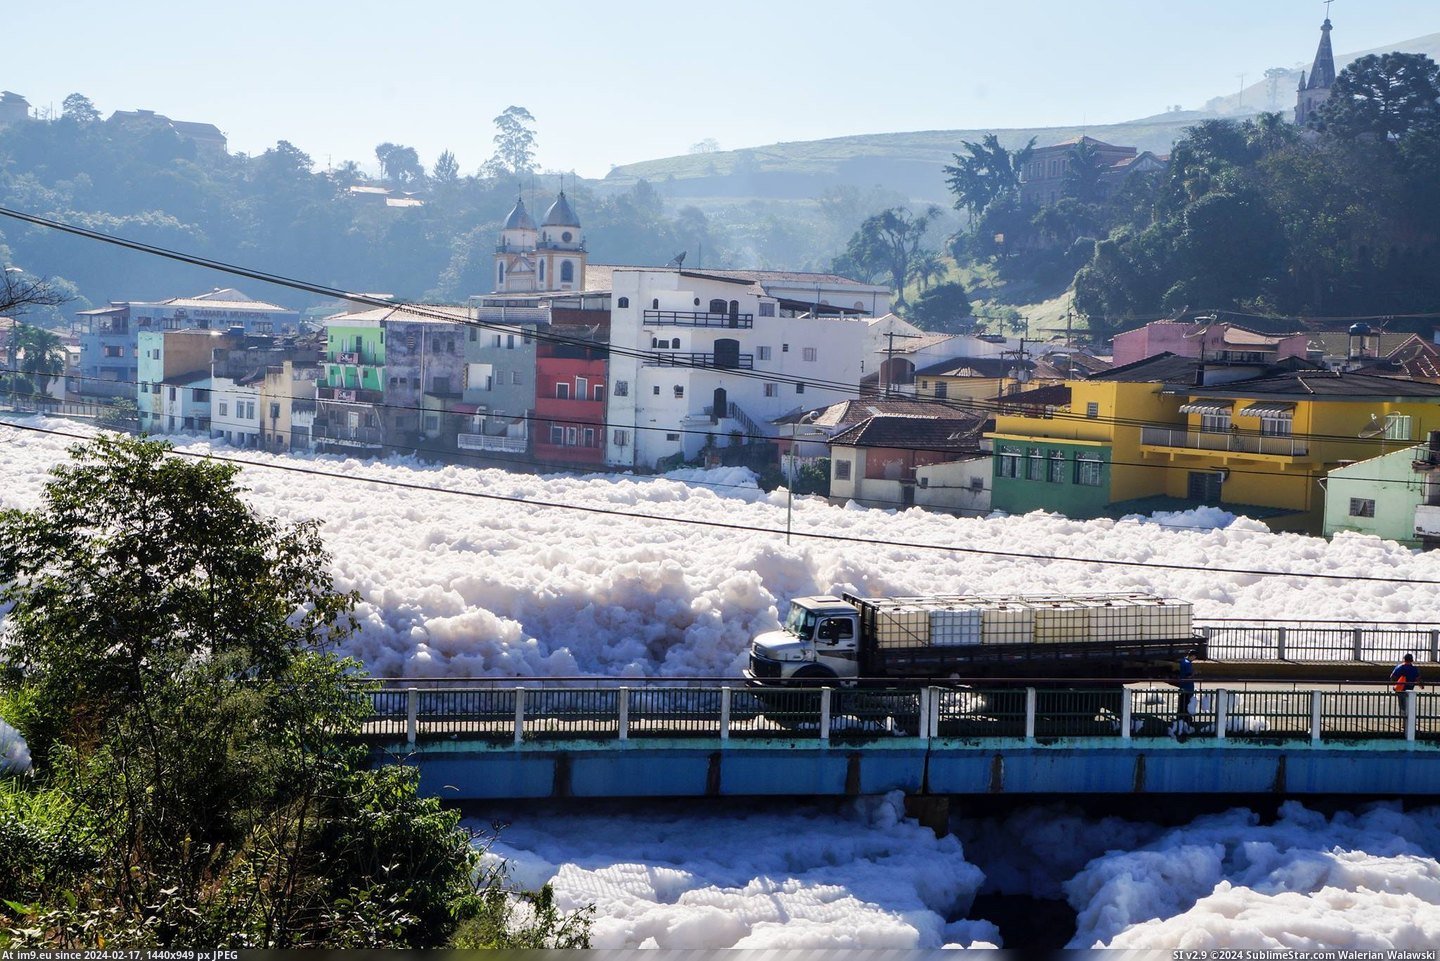 #Wtf #River #Foam #Pollution #Paulo #Covered #Brazil #Caused [Wtf] River in São Paulo, Brazil is covered in foam caused by pollution Pic. (Bild von album My r/WTF favs))